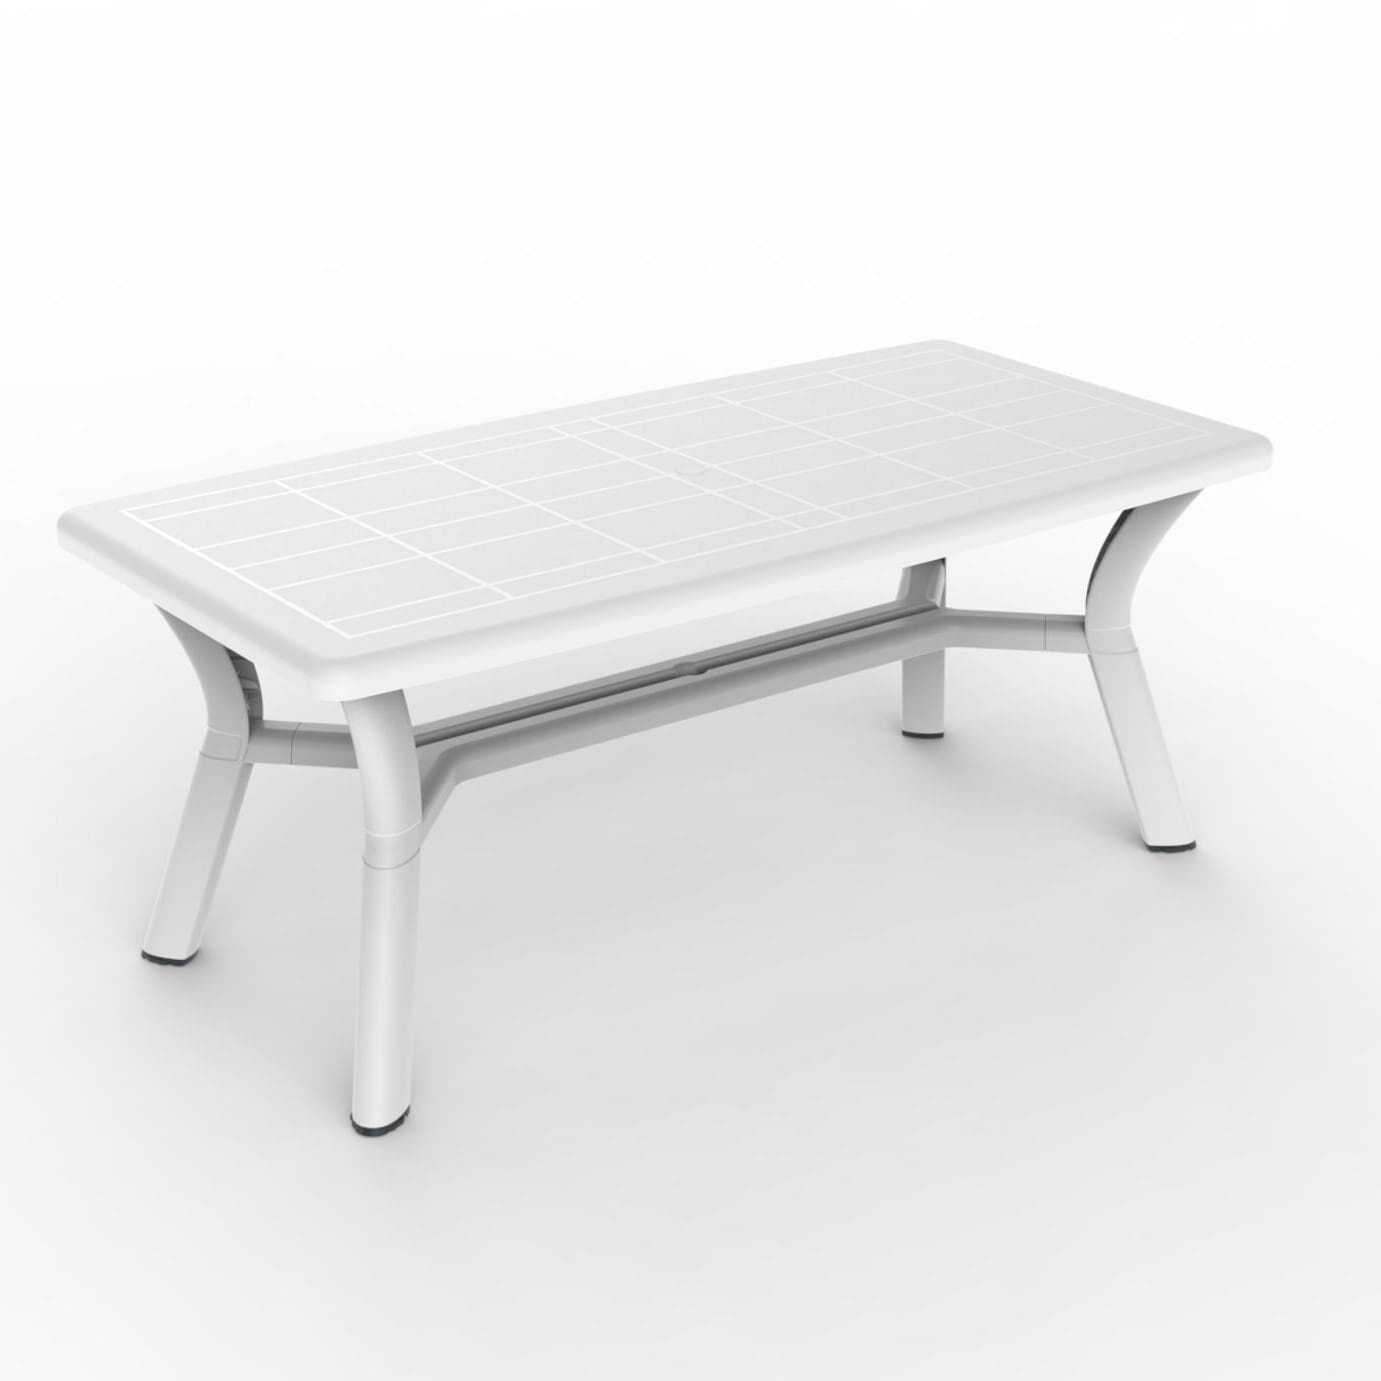 Garbar Orquida rectangular table outdoor 180x90 white